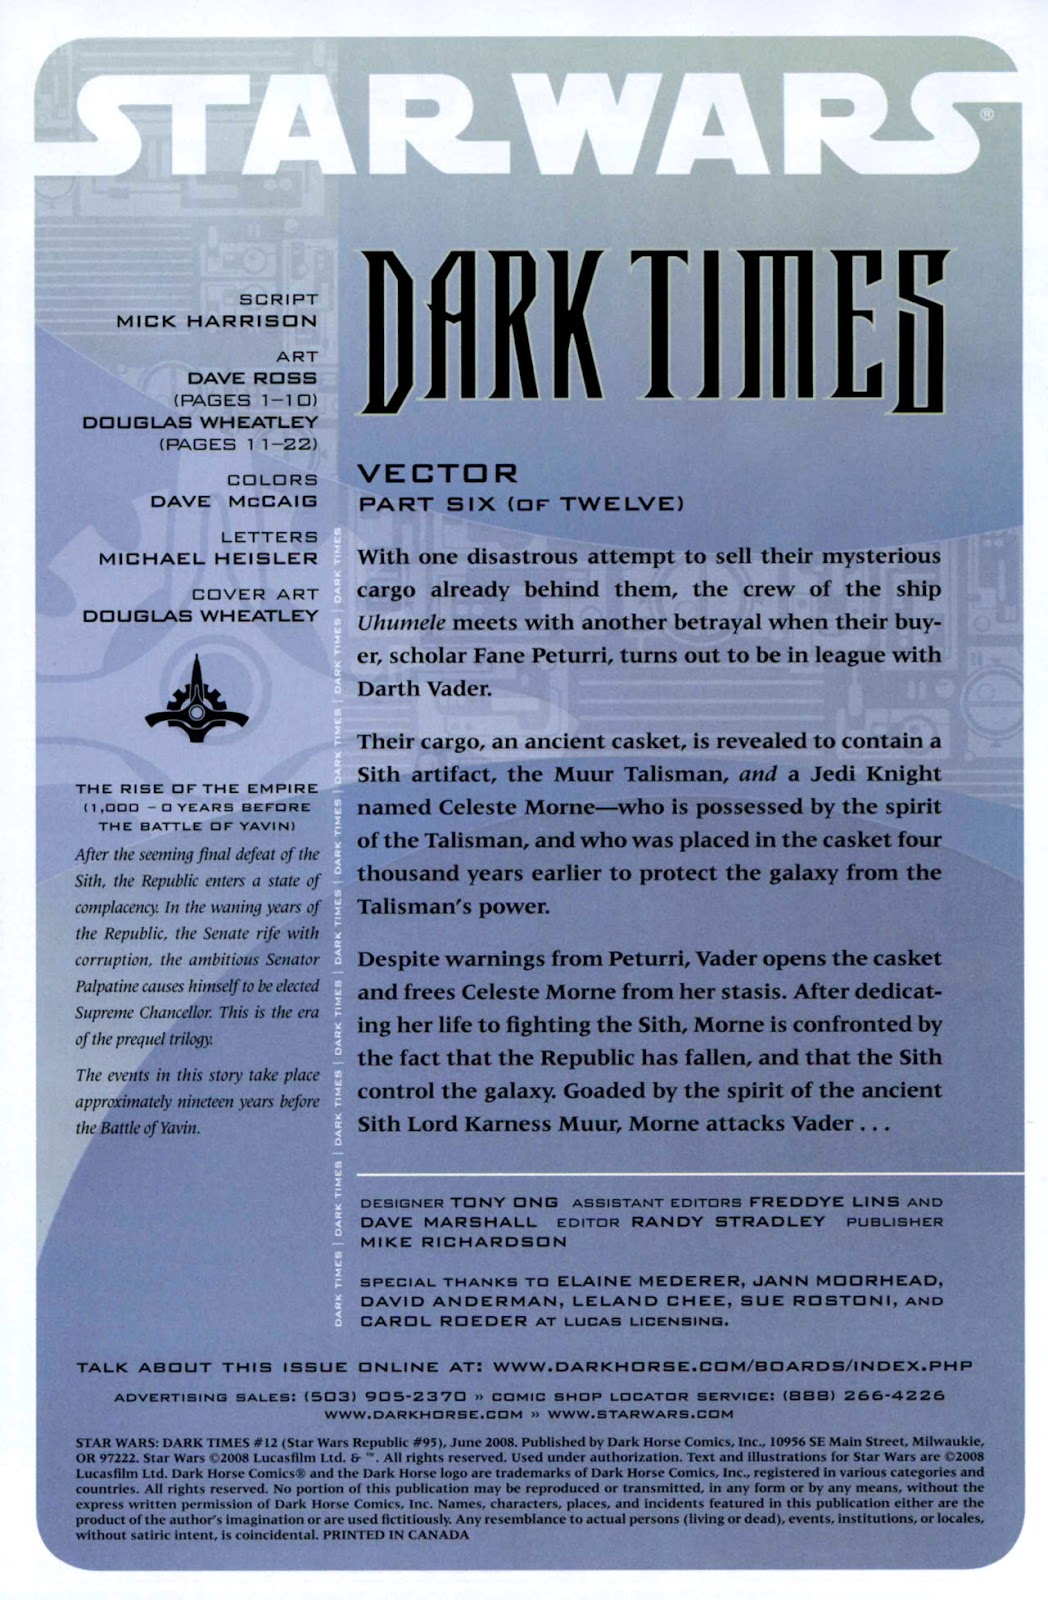 Star Wars: Dark Times issue 12 - Vector, Part 6 - Page 2